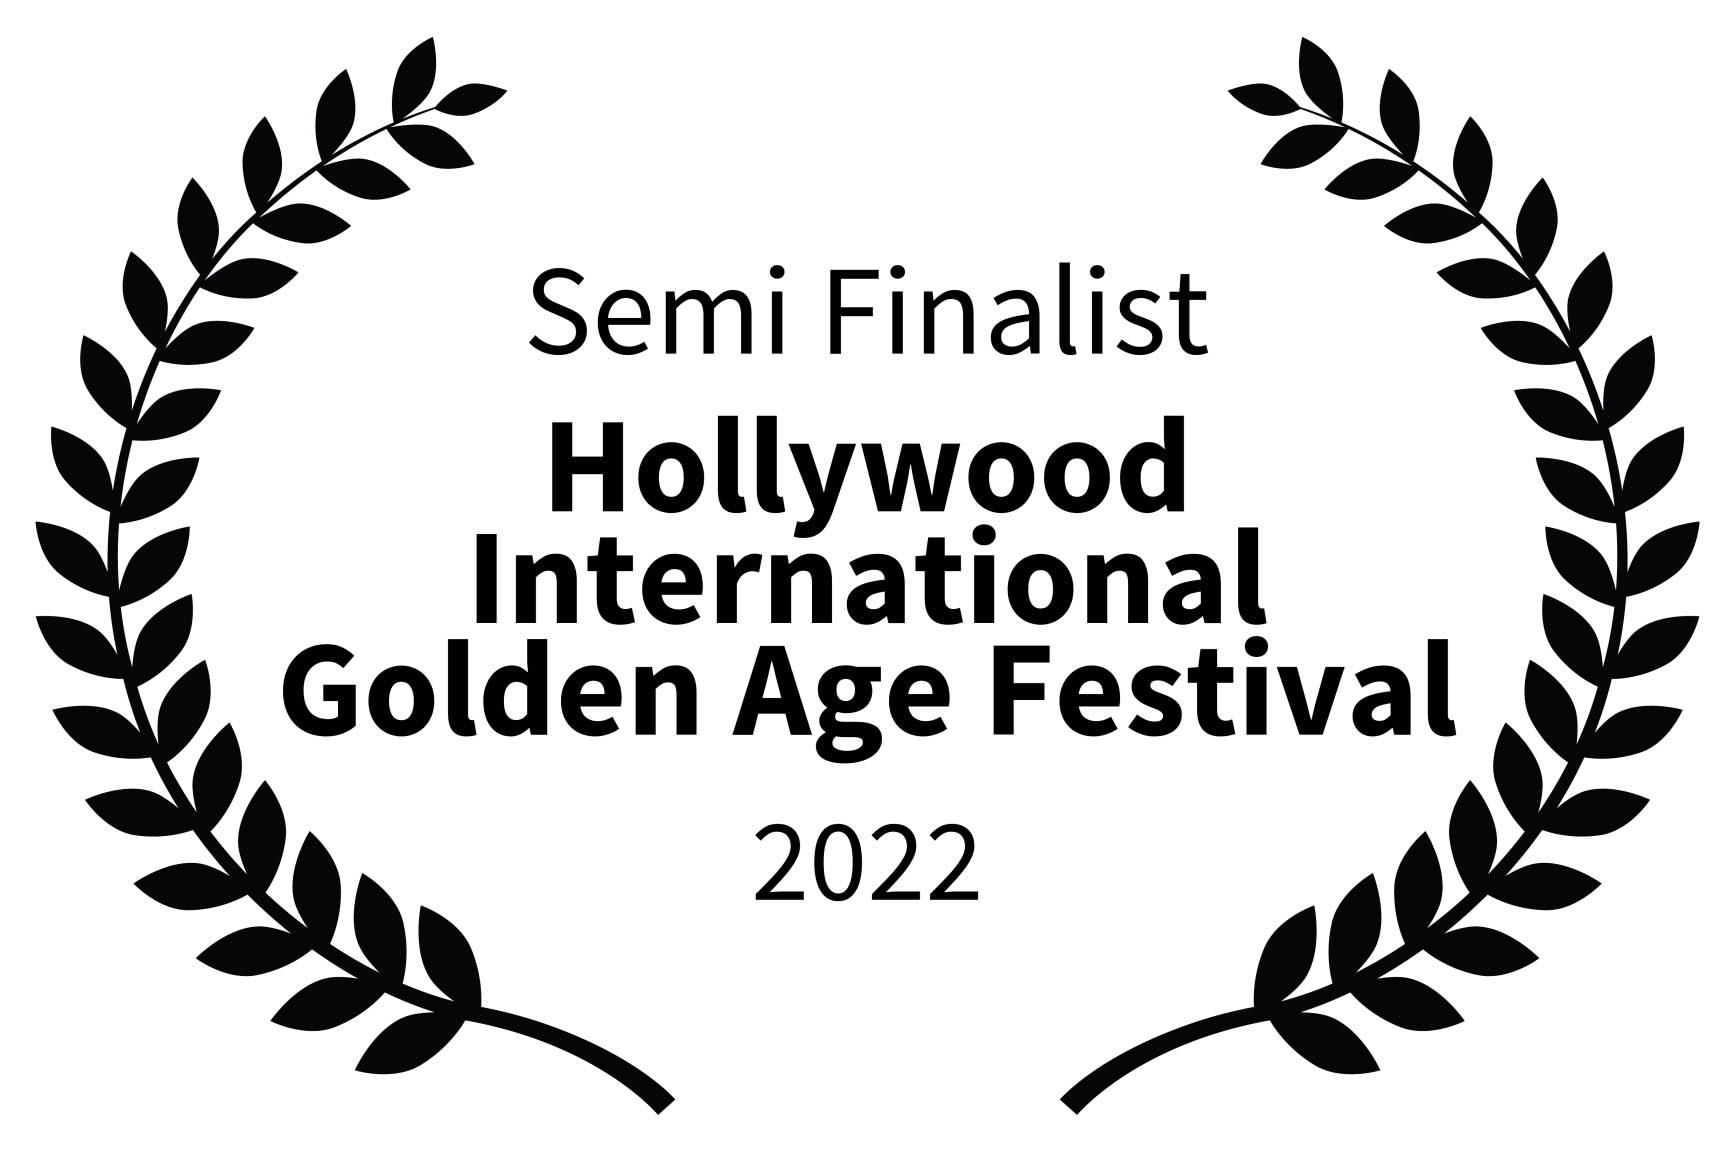 Semi Finalist Hollywood International Golden Age Festival 2022